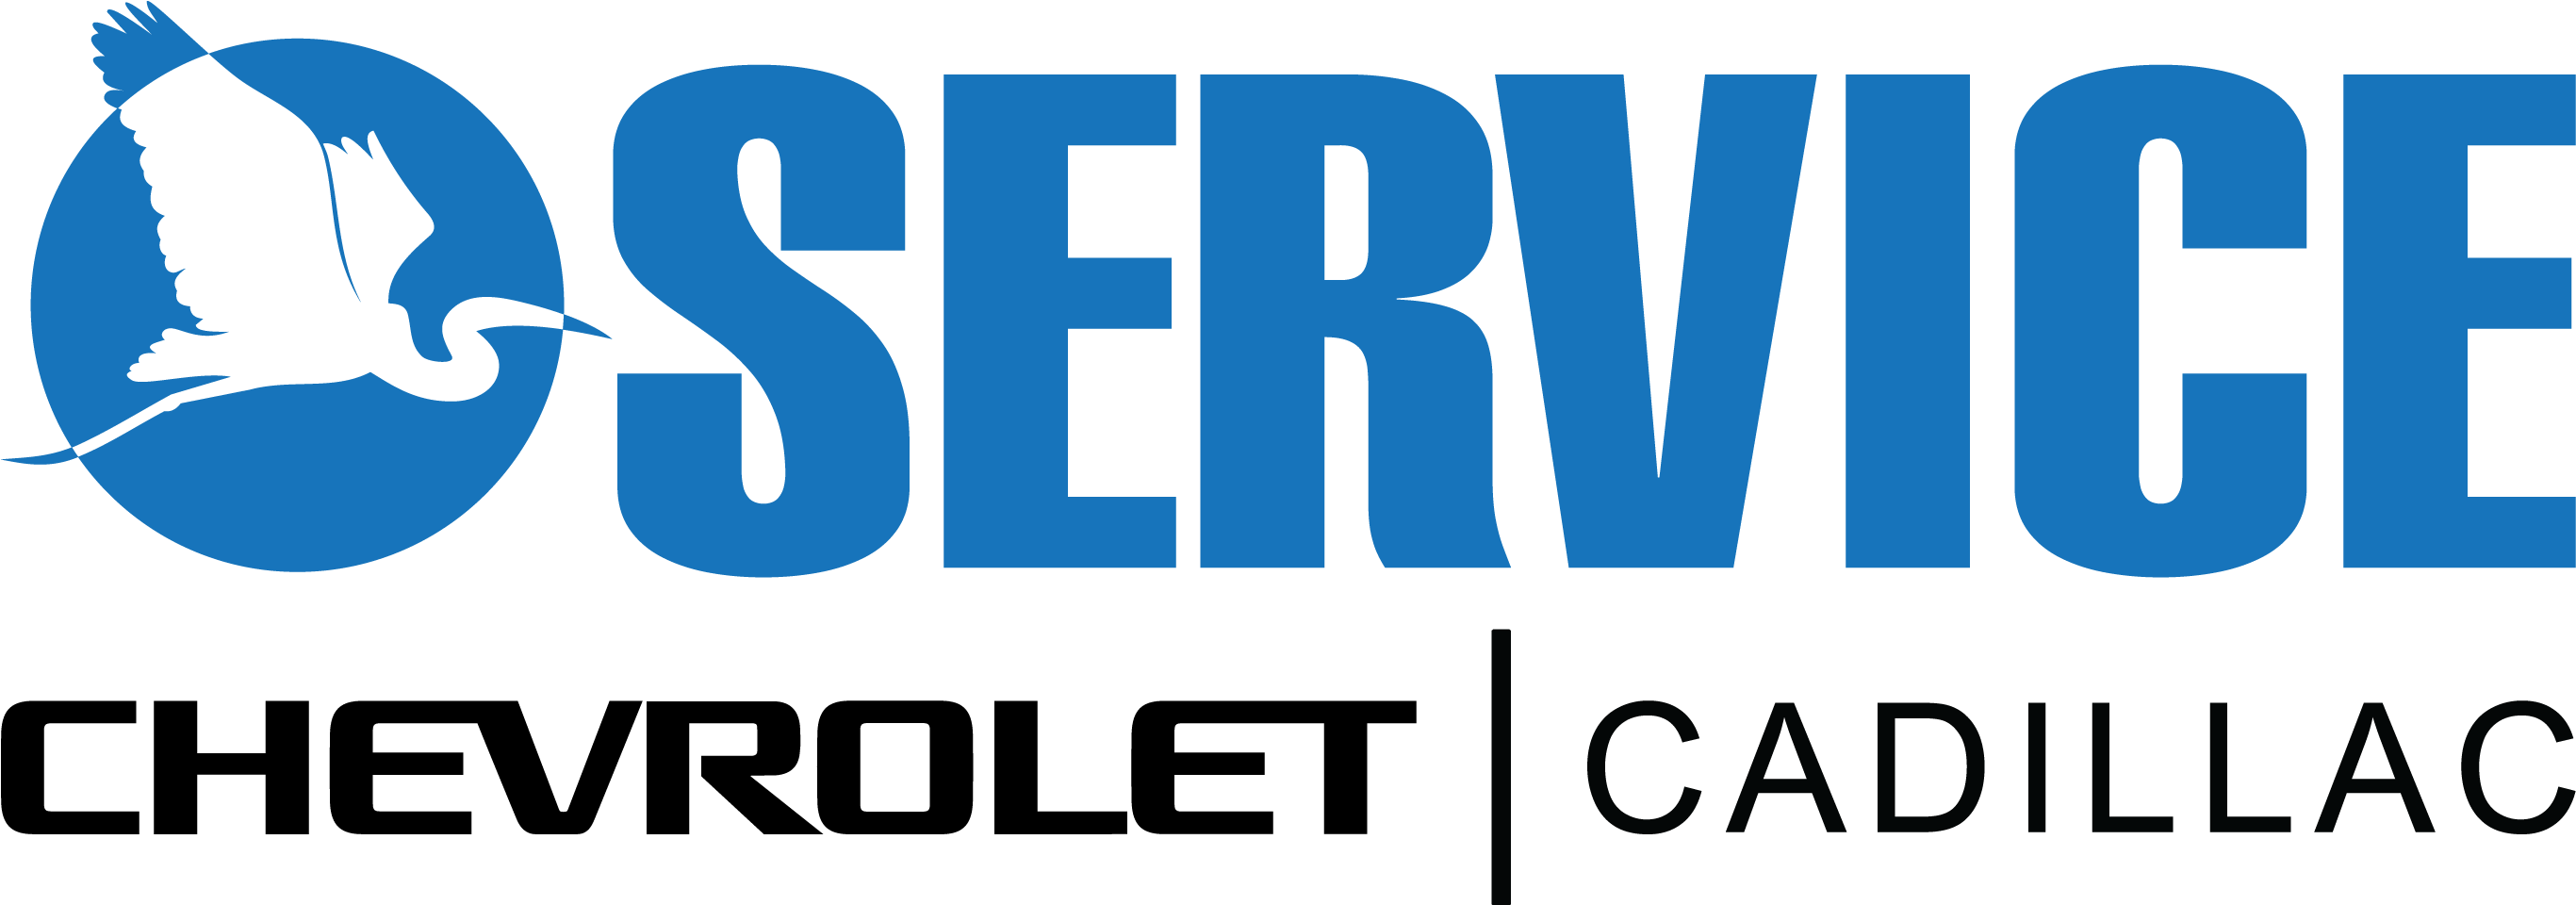 Service Chevrolet - 2019 Rst Silverado Crew (2950x959), Png Download